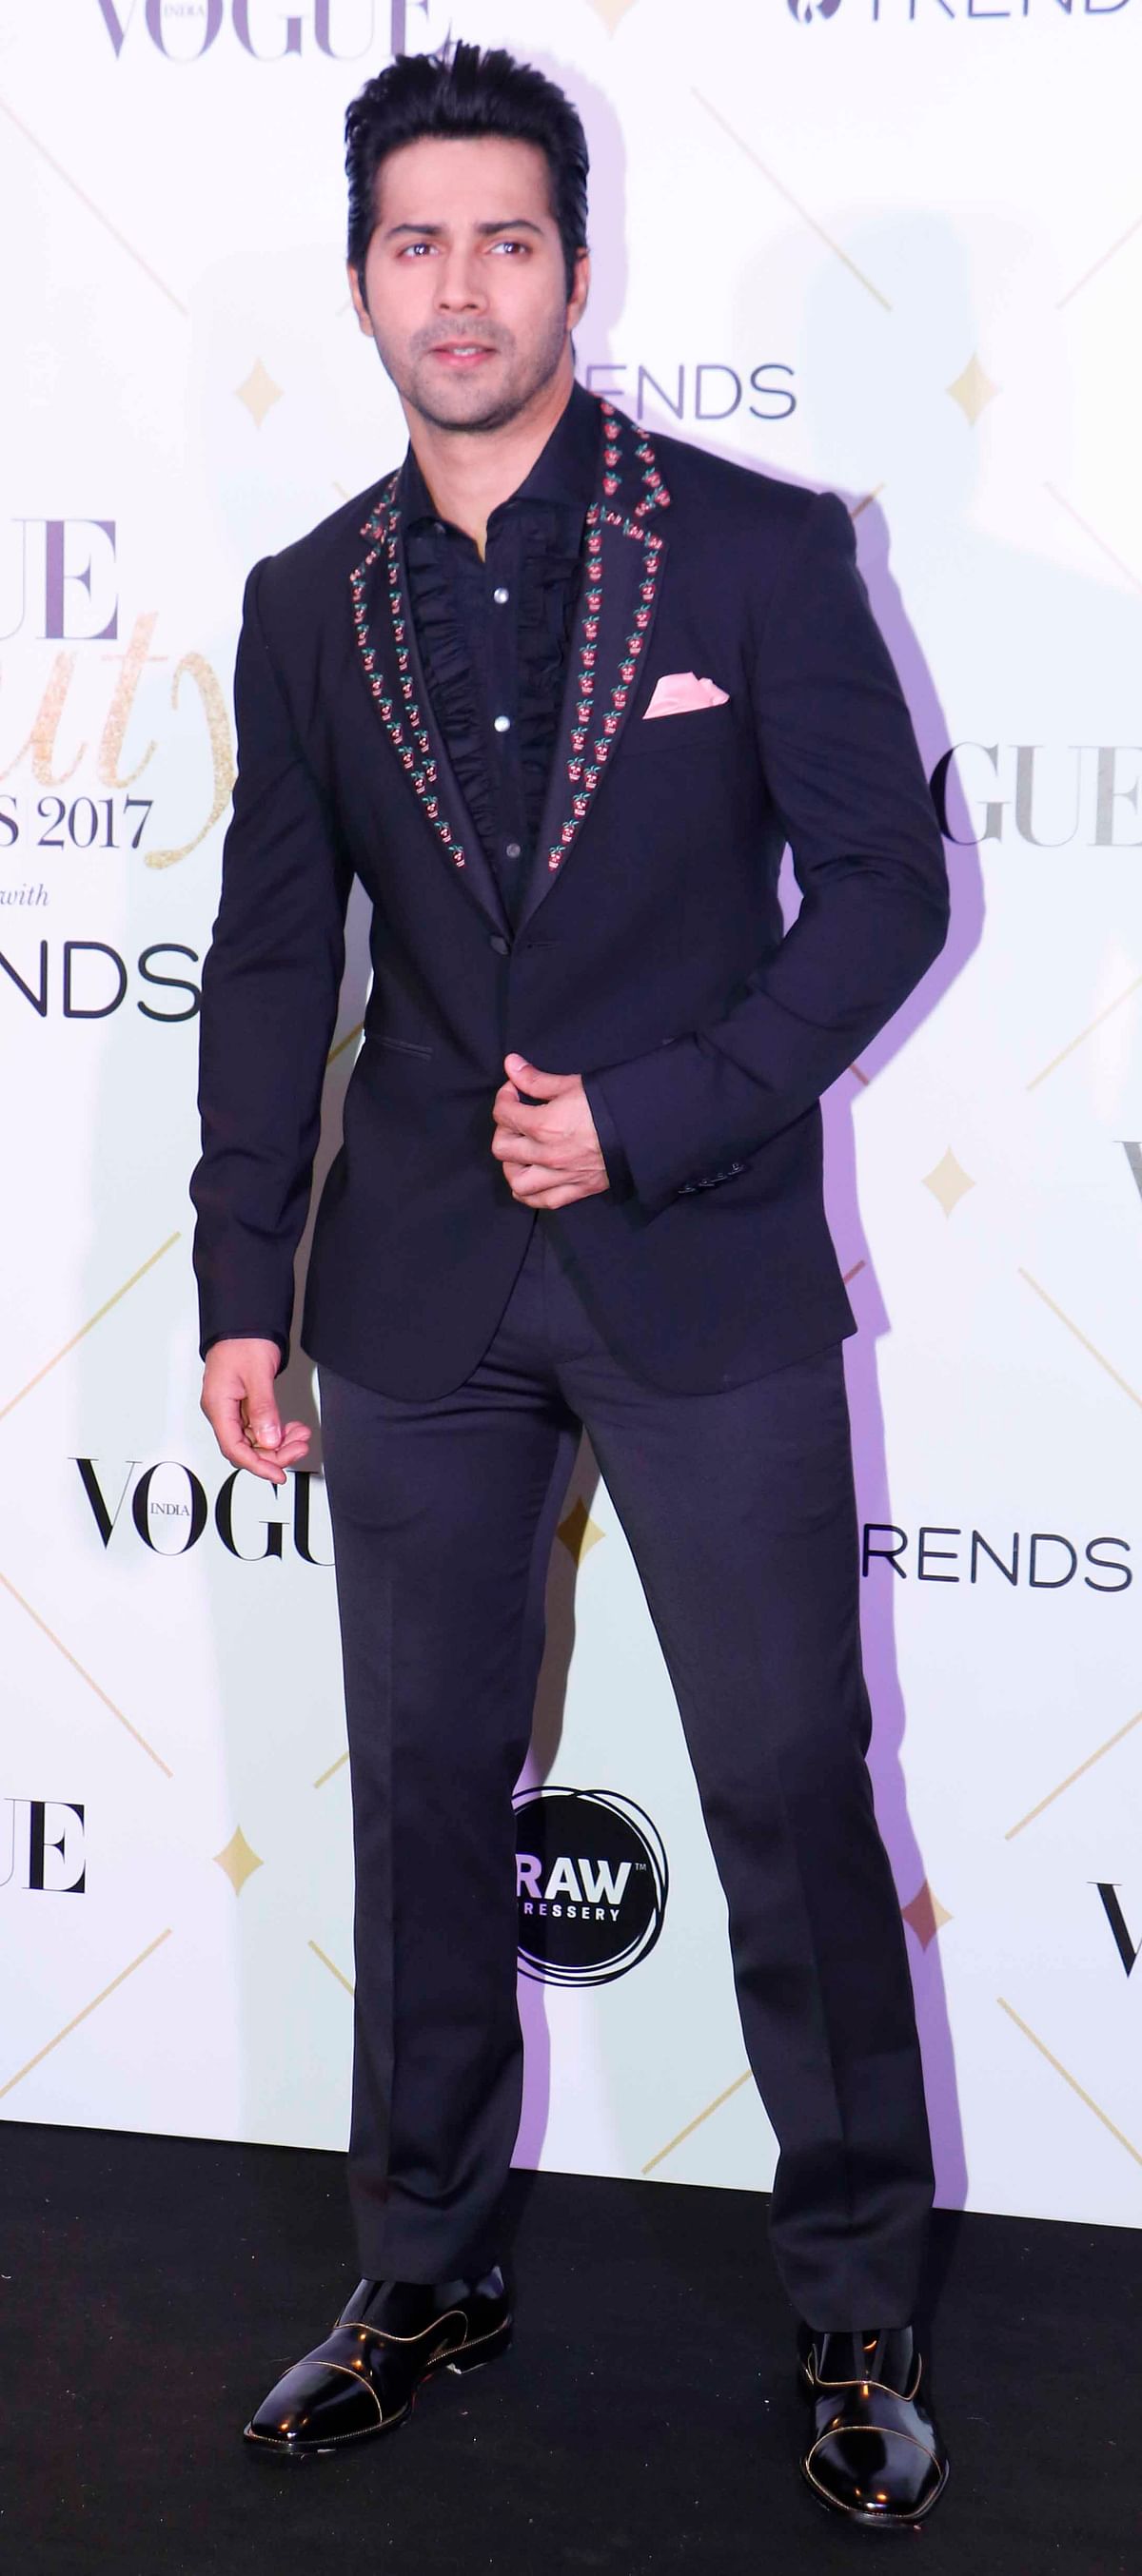 Karisma Kapoor, Aditi Rao Hydari and other stars were also present at Vogue Beauty Awards 2017.